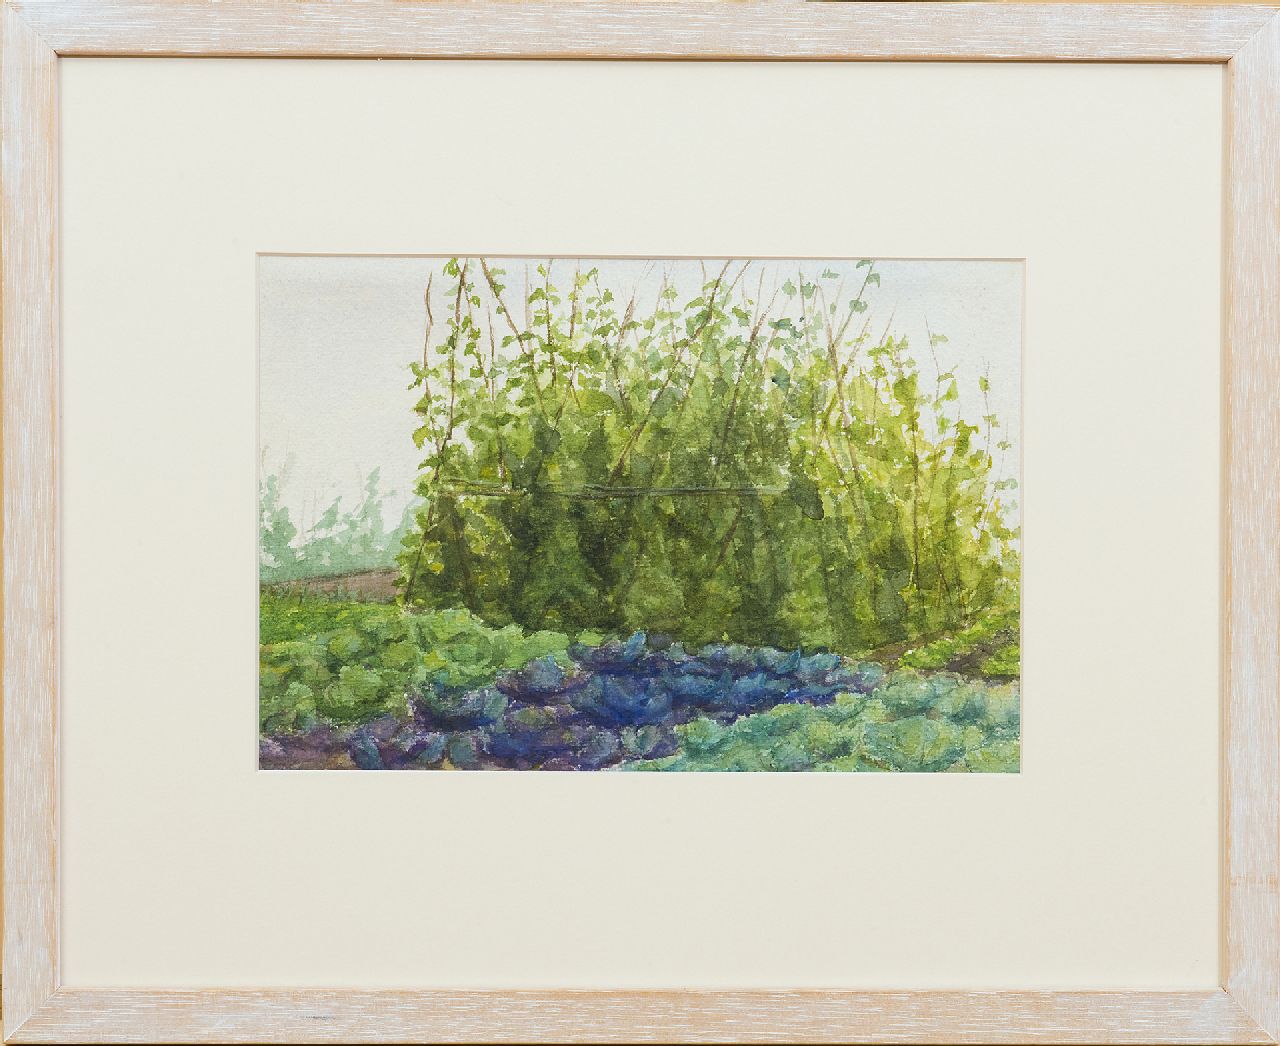 Fritzlin M.C.L.  | Maria Charlotta 'Louise' Fritzlin, A vegetable garden, watercolour on paper 18.7 x 27.6 cm, painted '97 reverse